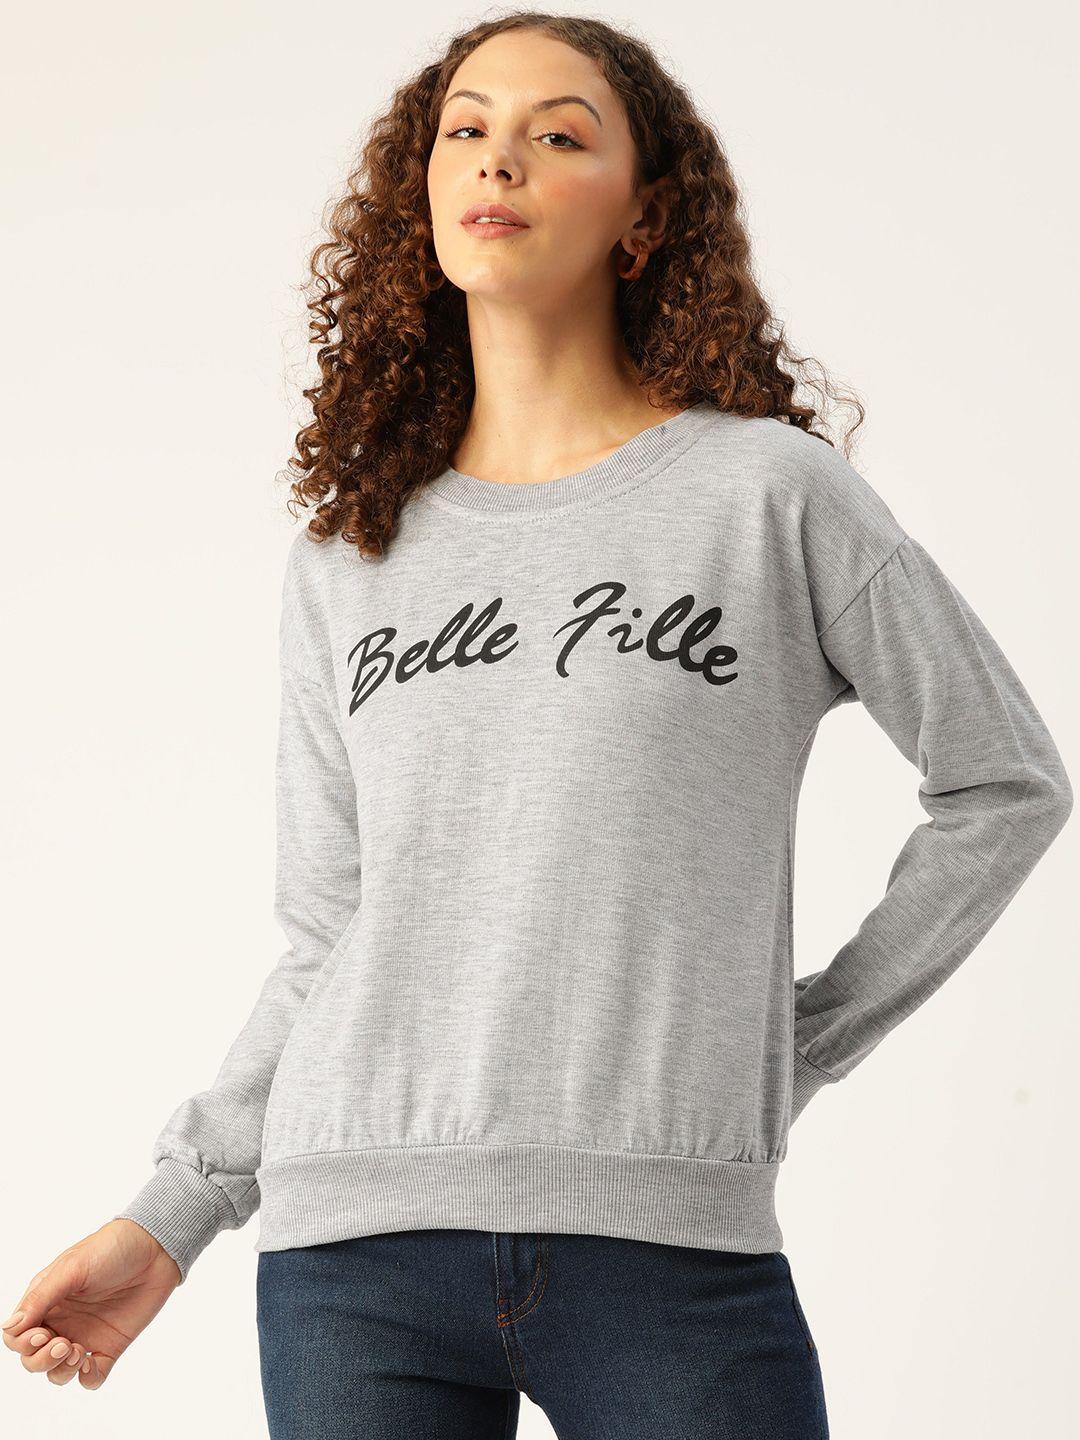 belle fille women printed sweatshirt